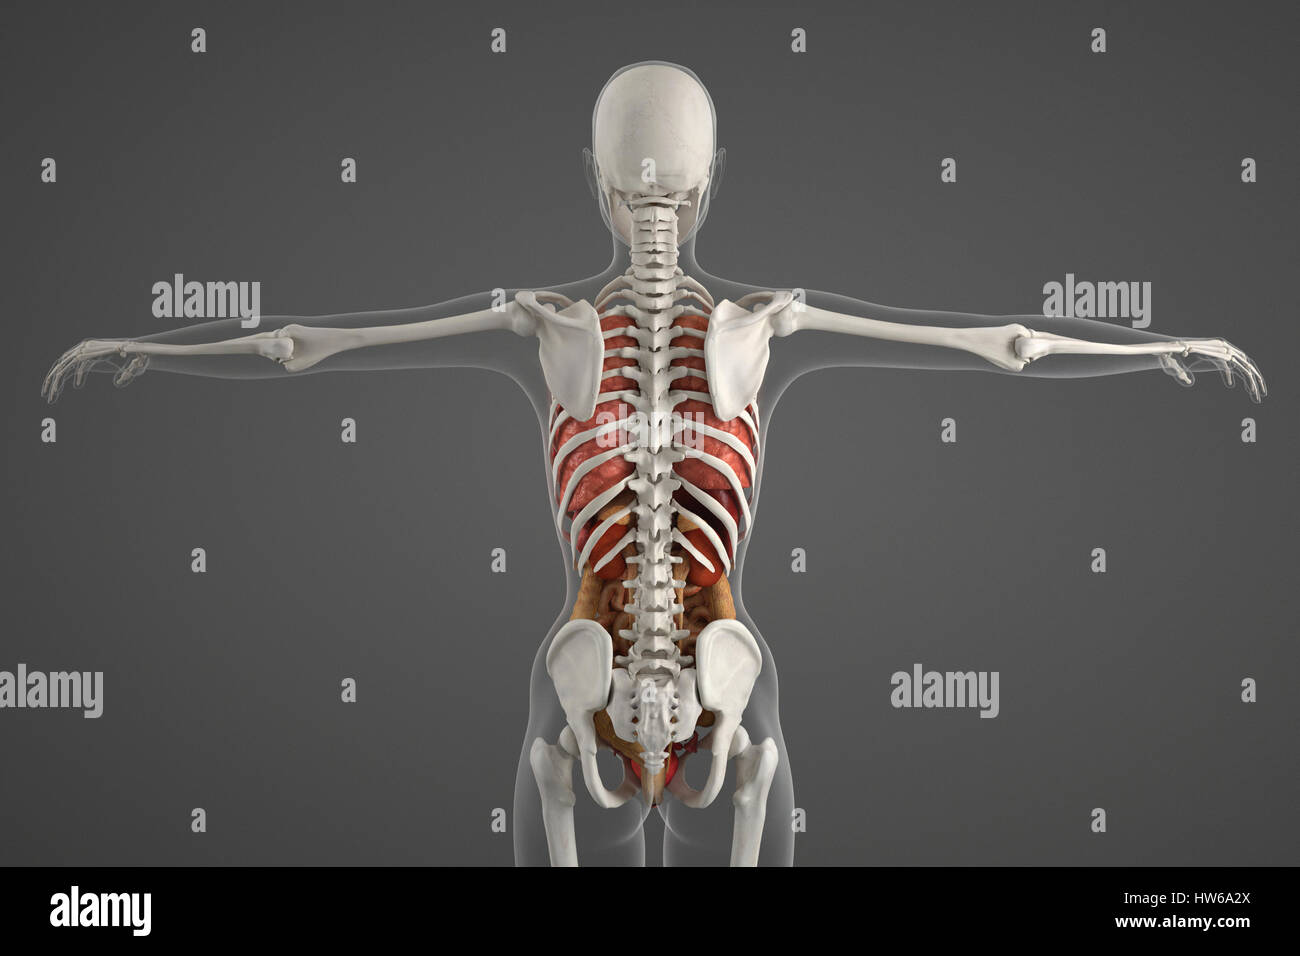 Human skeletal structure, illustration. Stock Photo